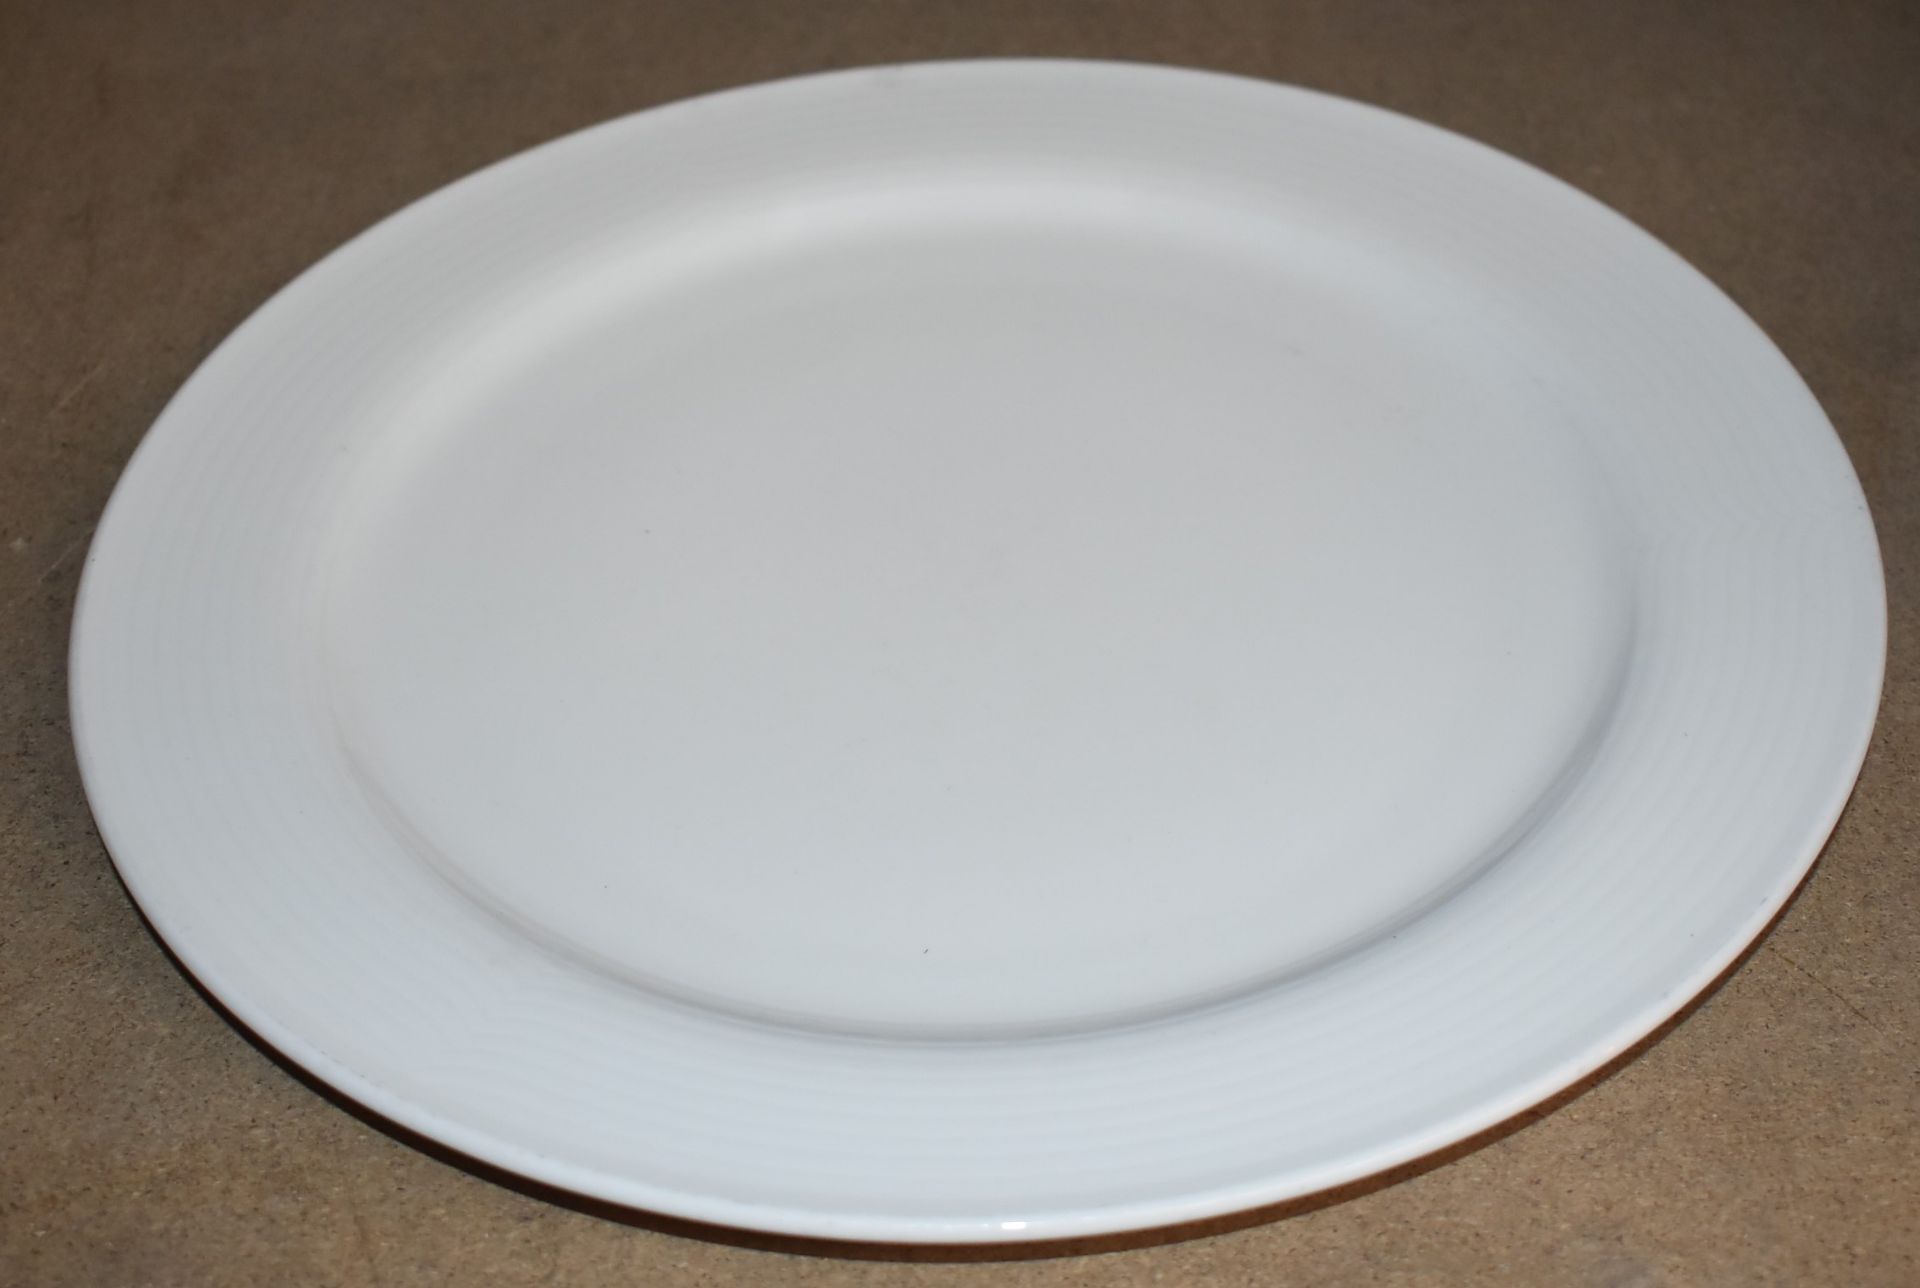 6 x Villeroy & Boch Contemporary Porcelain Flat Dinner Plates - 31.5 cms - CL011 - Ref: PX284 -